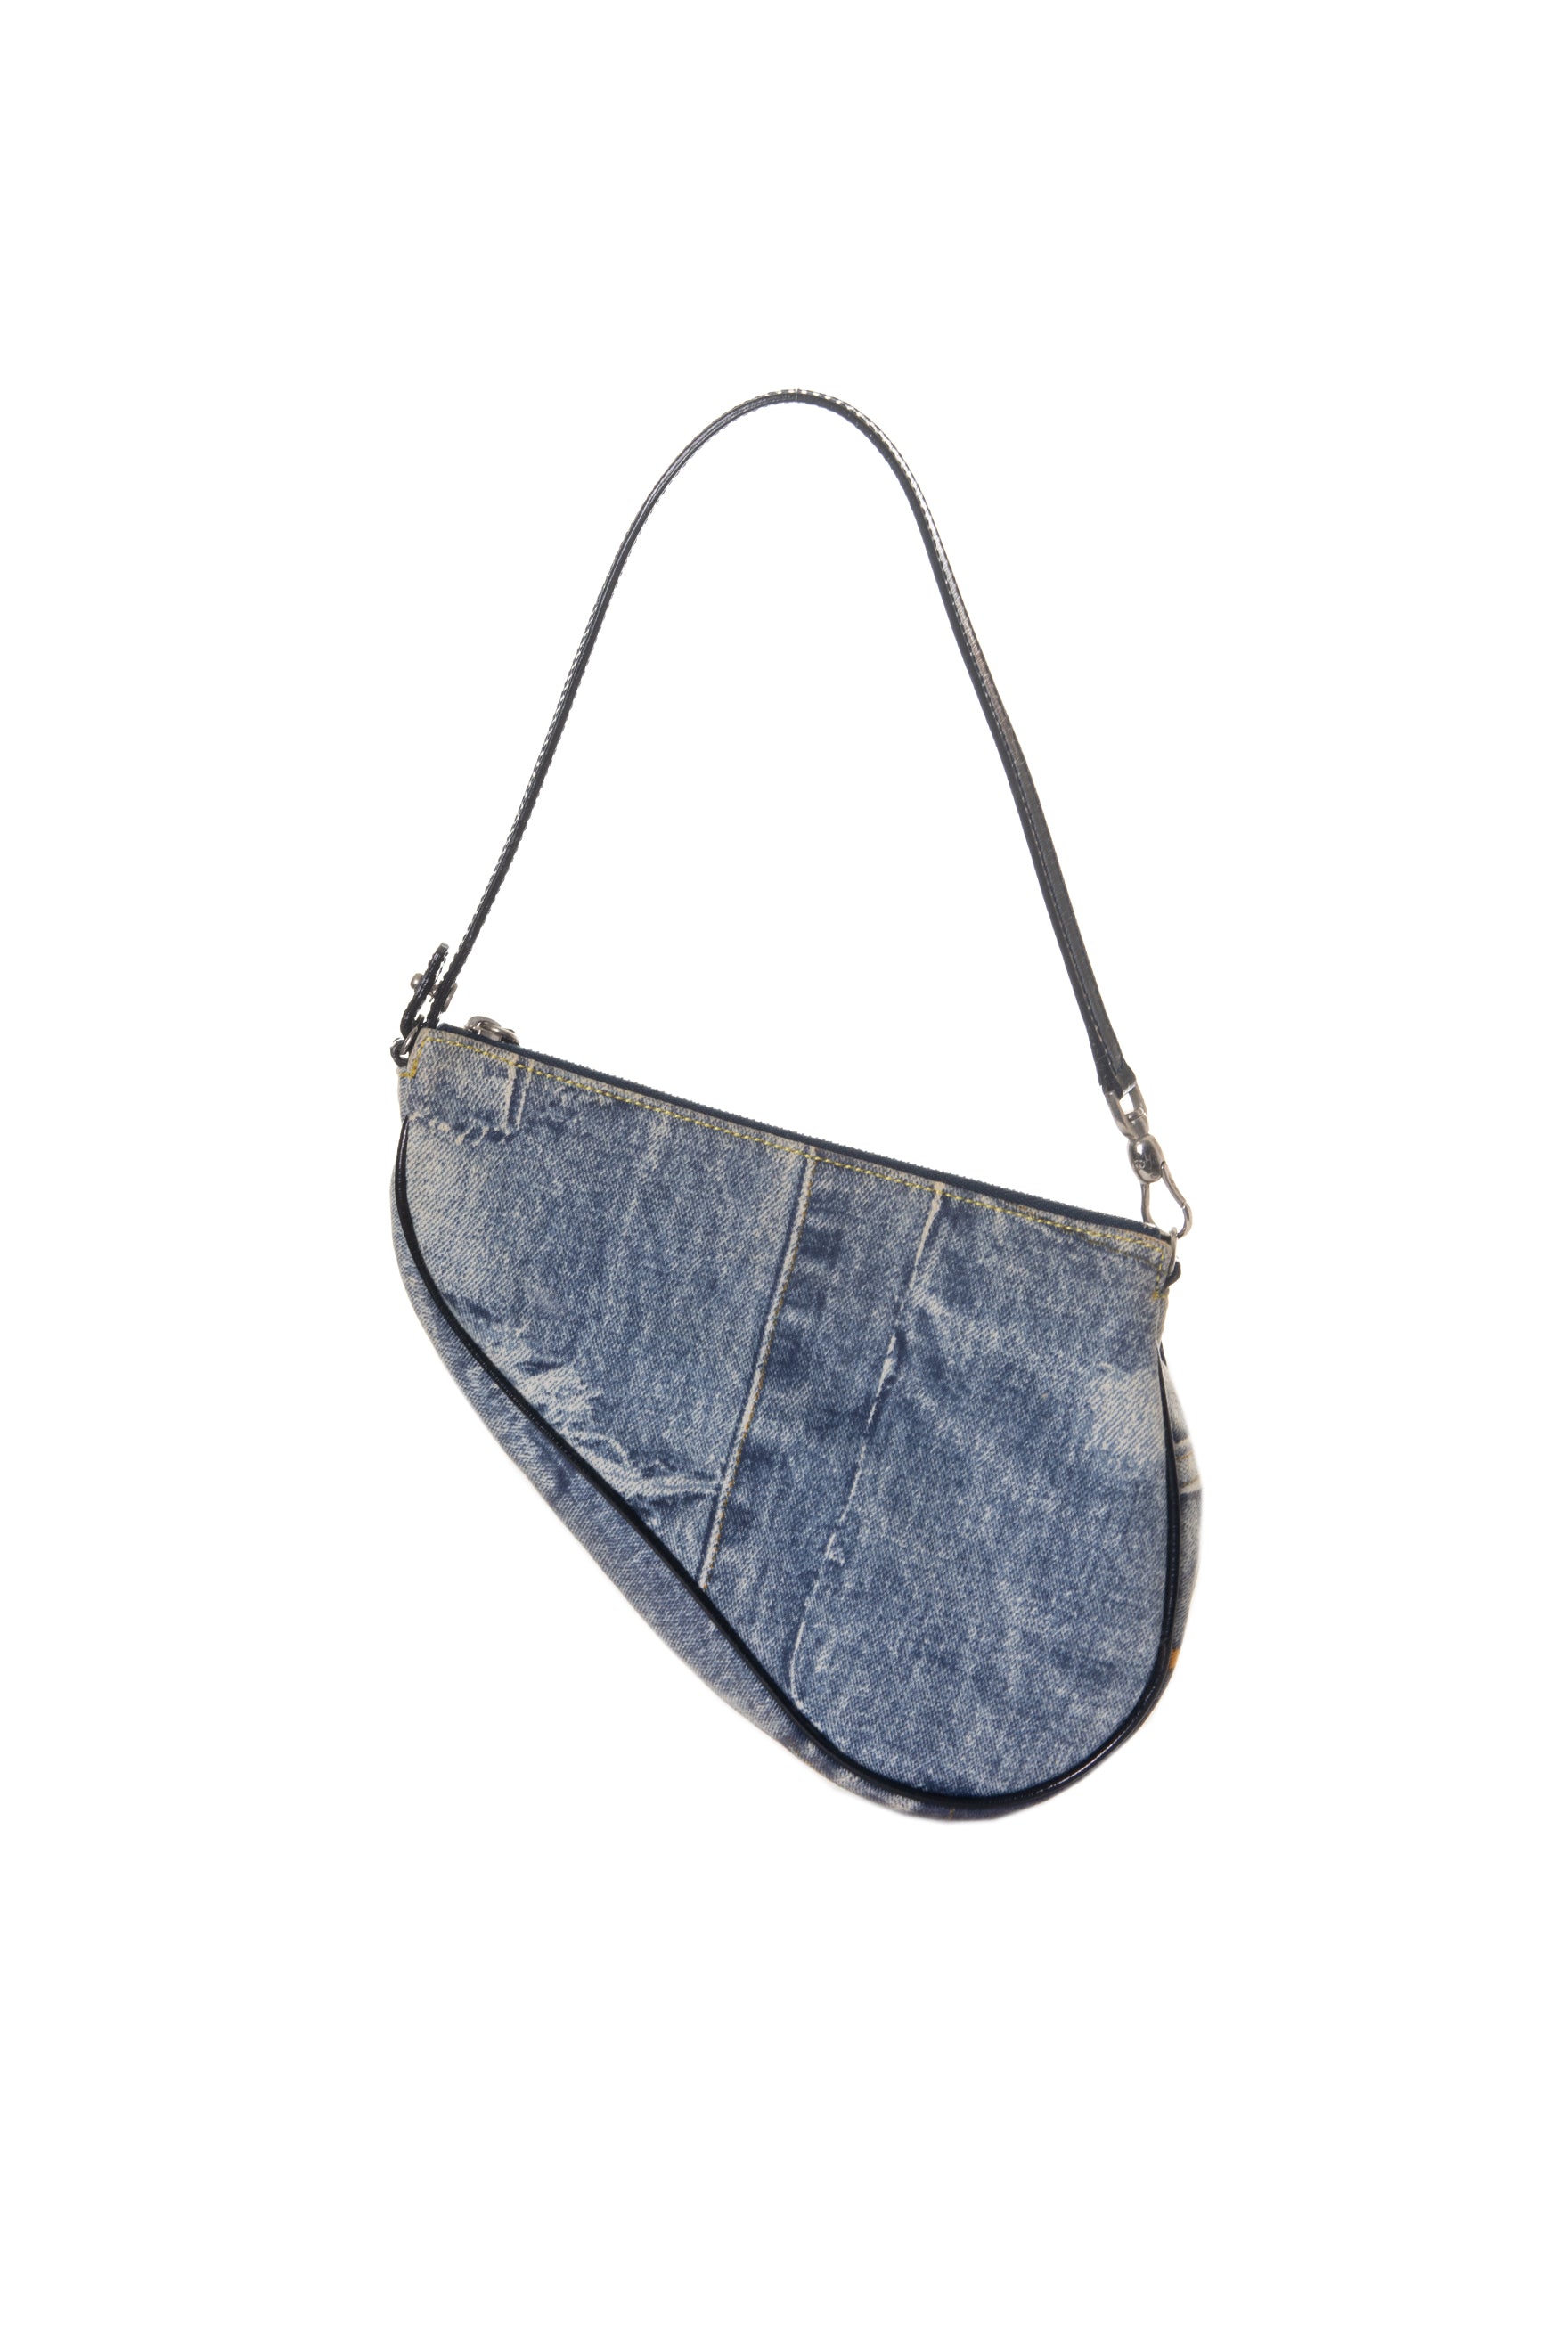 4400$ Dior saddle Bag Medium Size